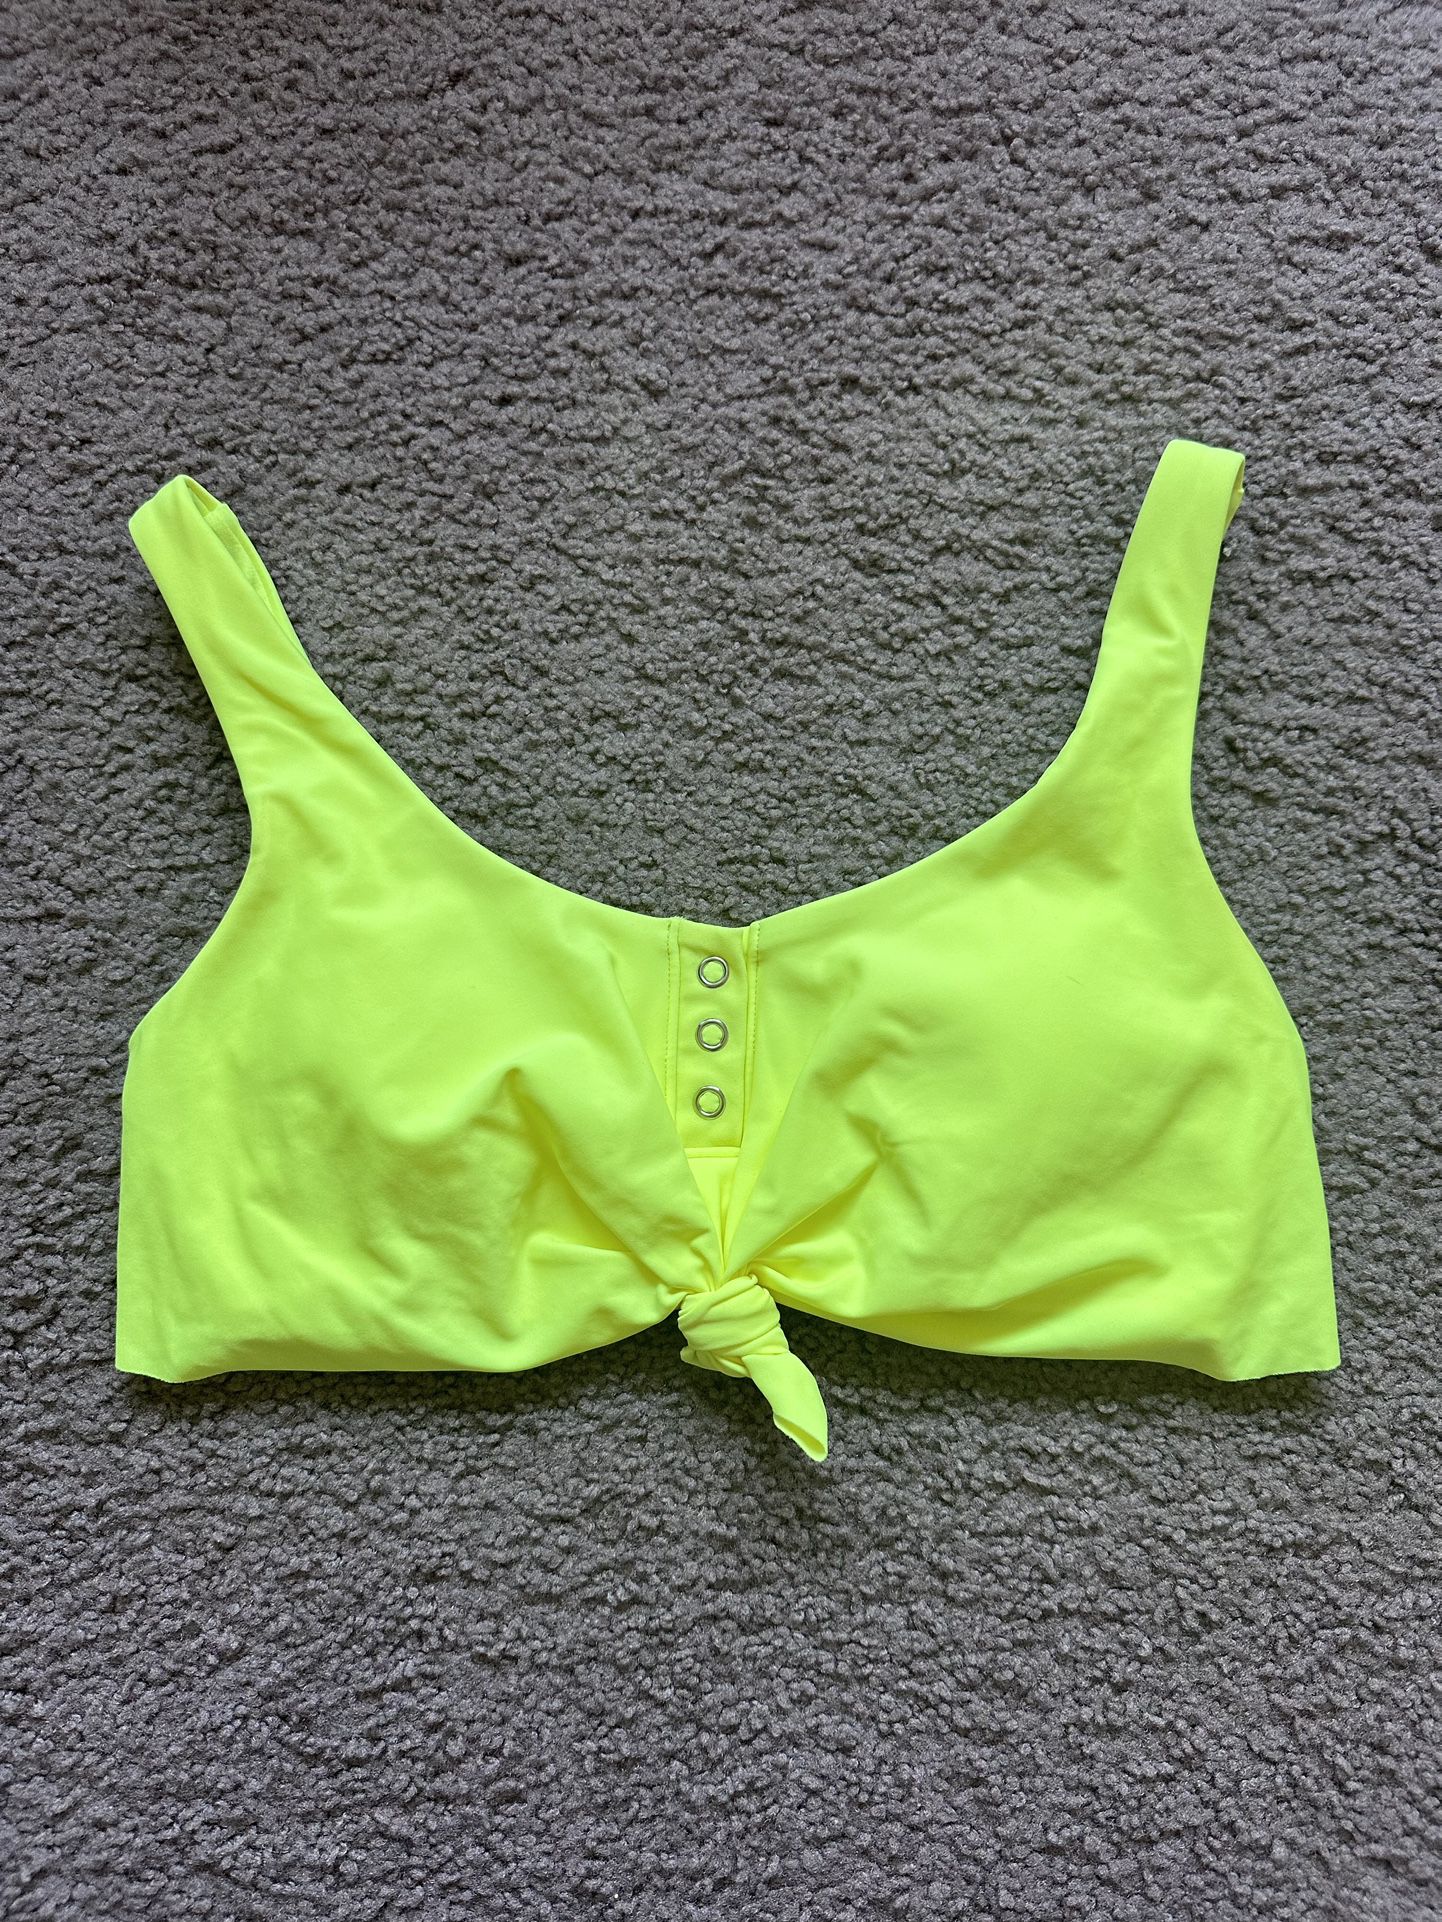 Neon Yellow Bikini Top (Size S) - LOCAL MEETUP ONLY